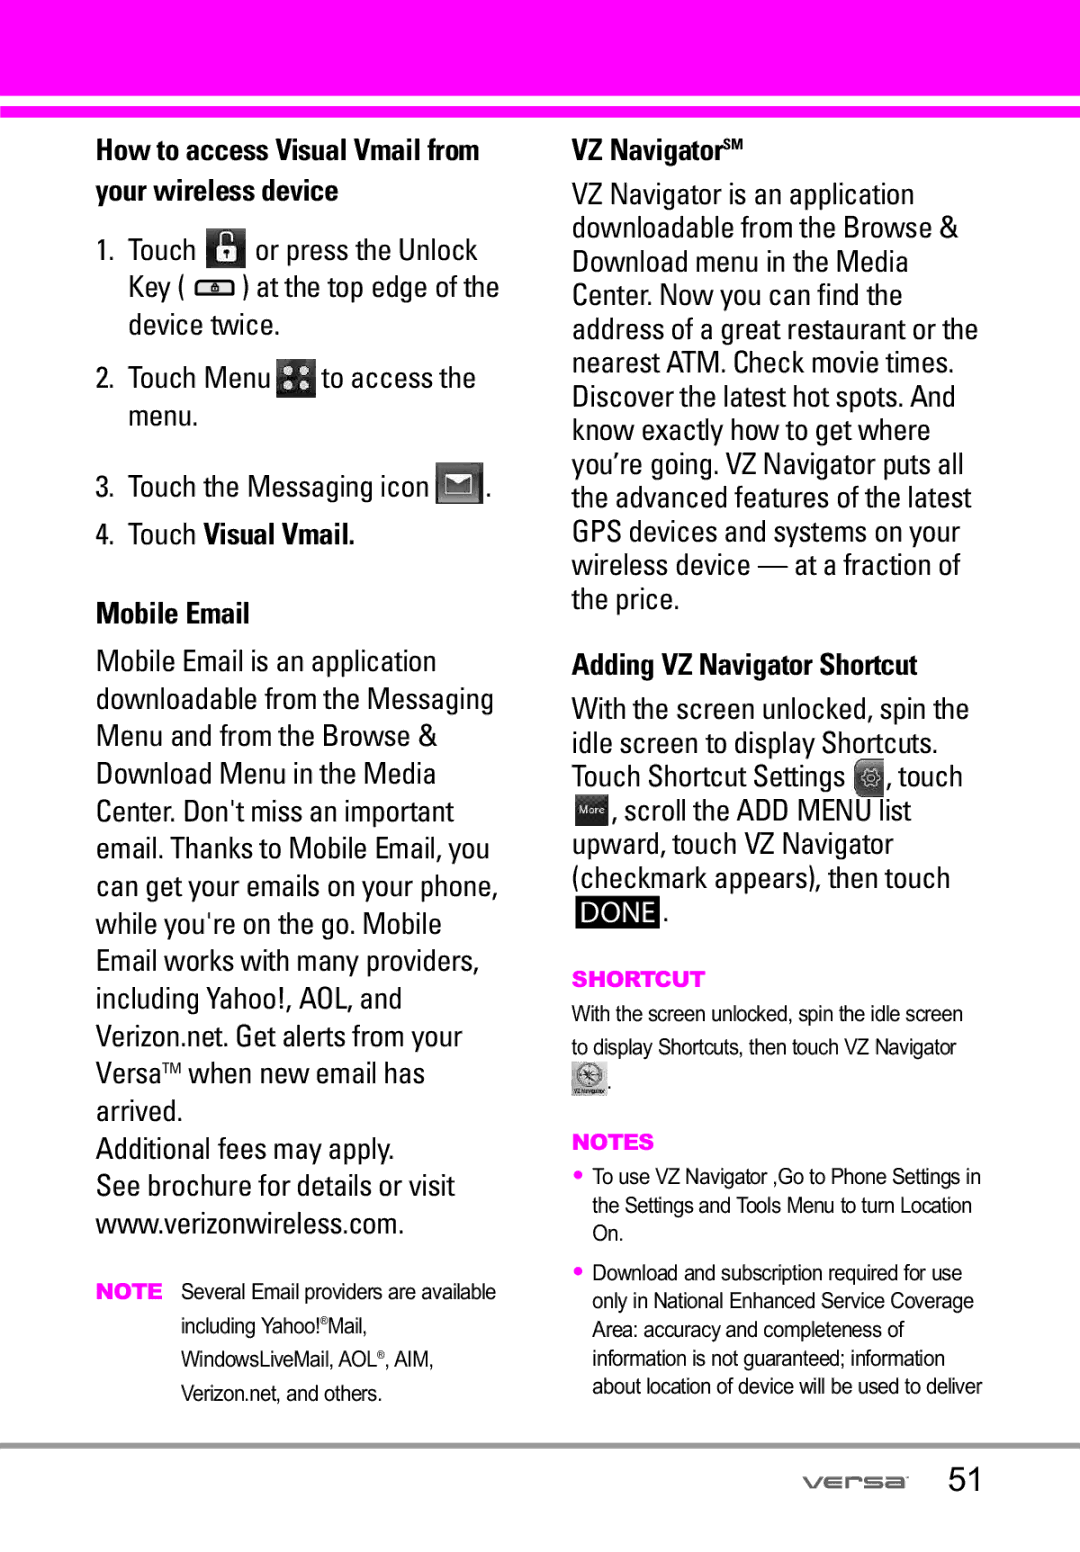 LG Electronics VX9600 manual Touch Visual Vmail Mobile Email, VZ NavigatorSM, Adding VZ Navigator Shortcut 